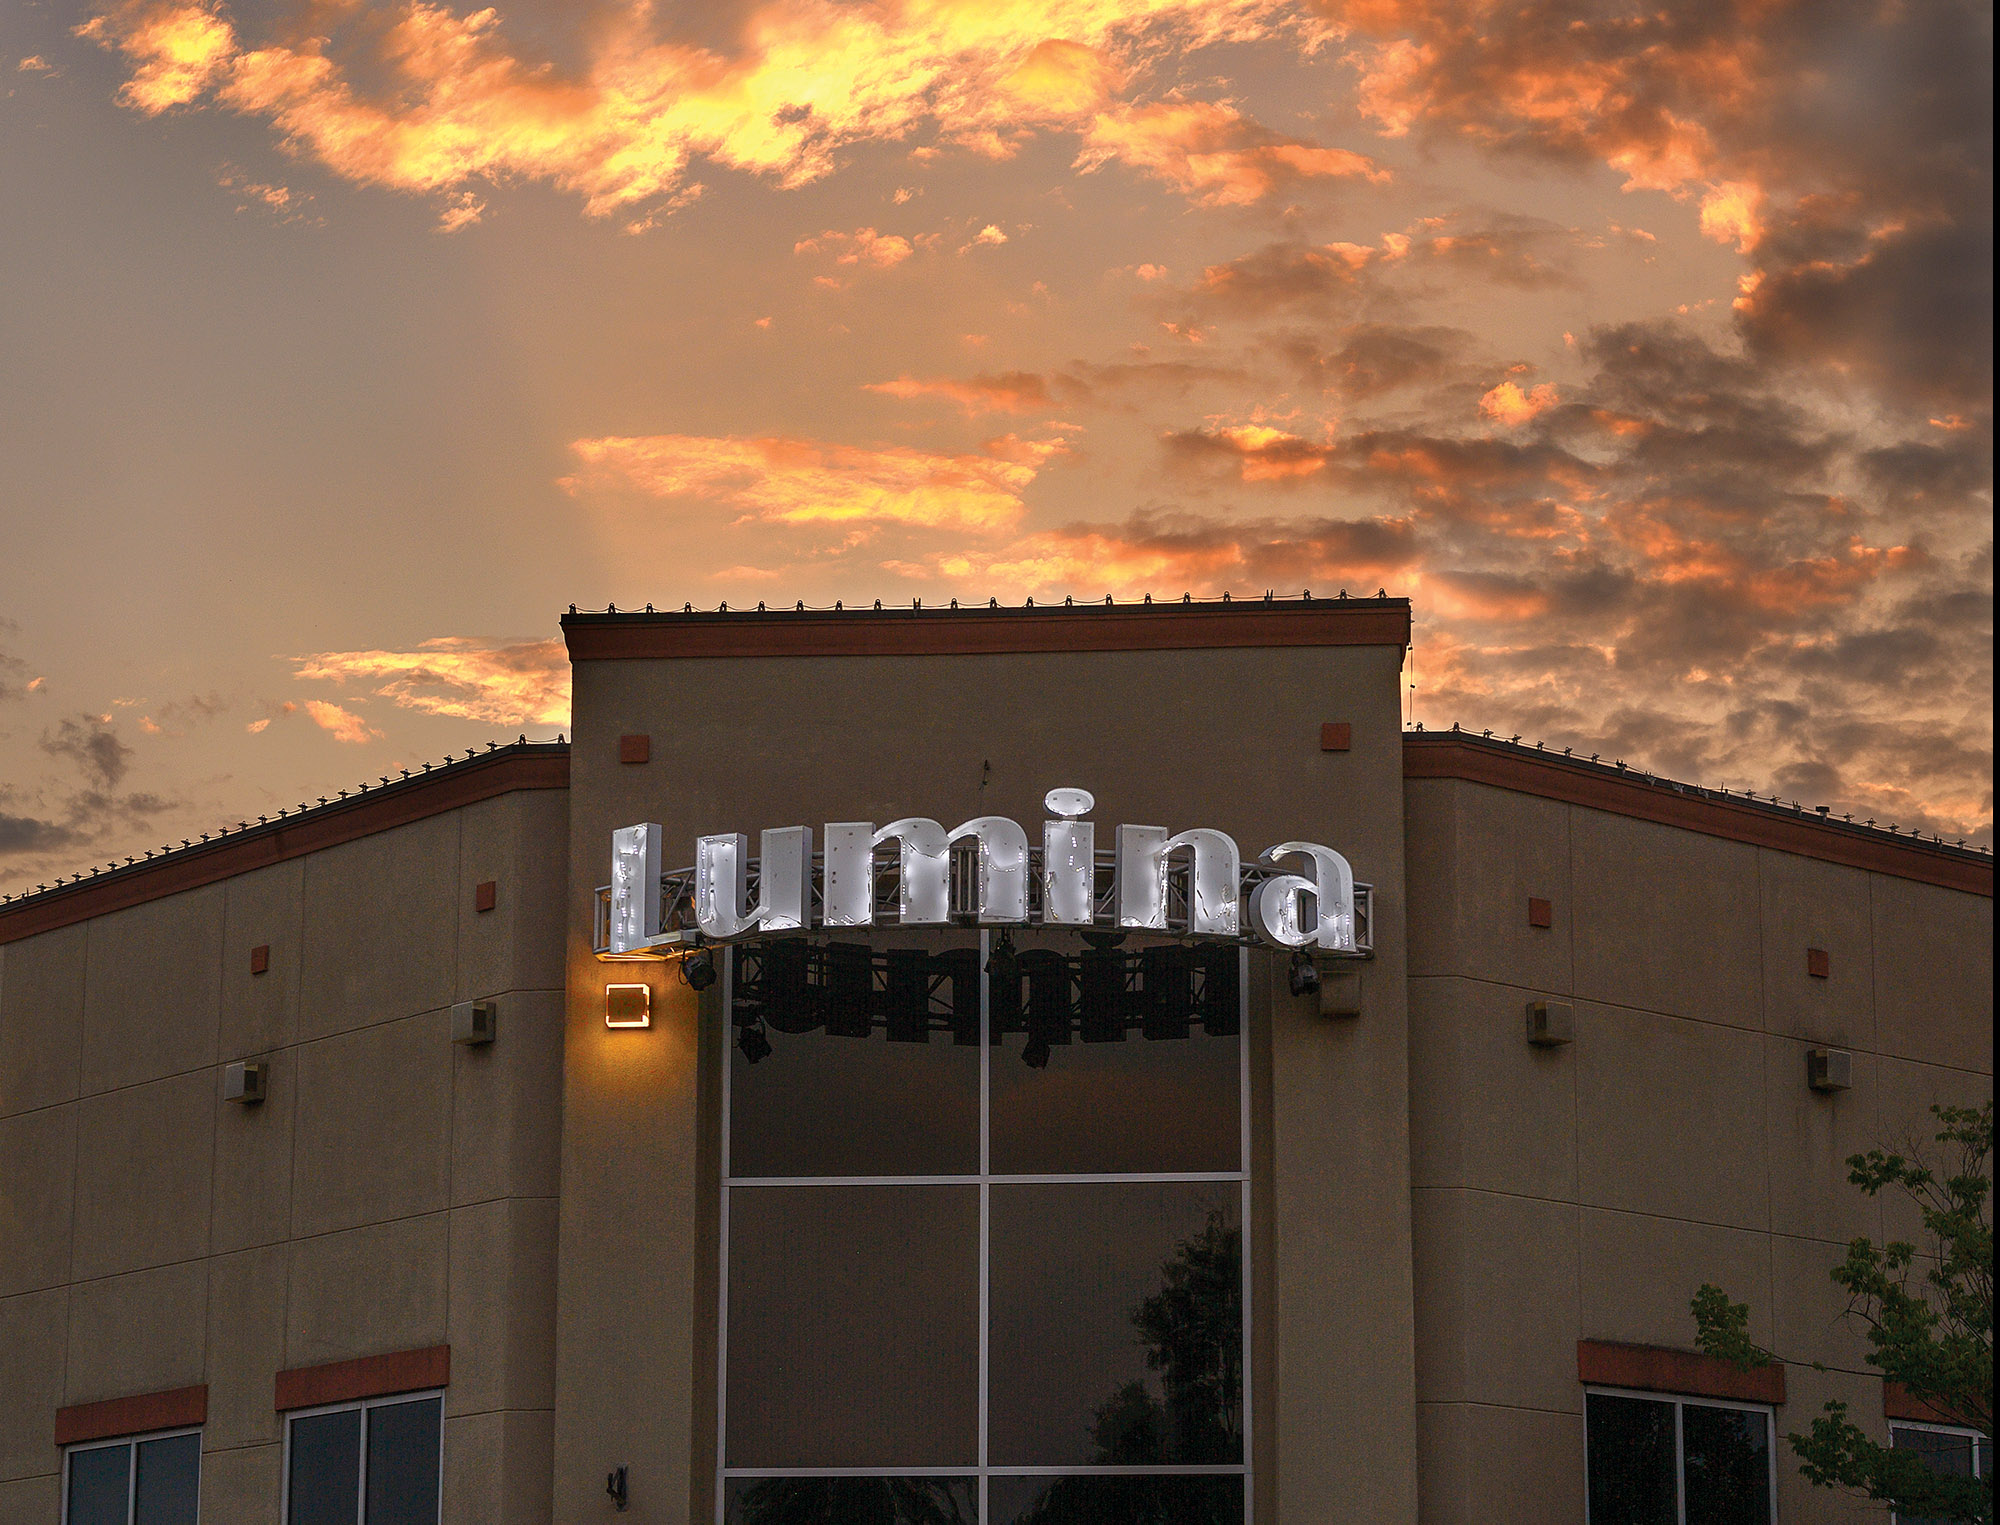 The Lumina Theater